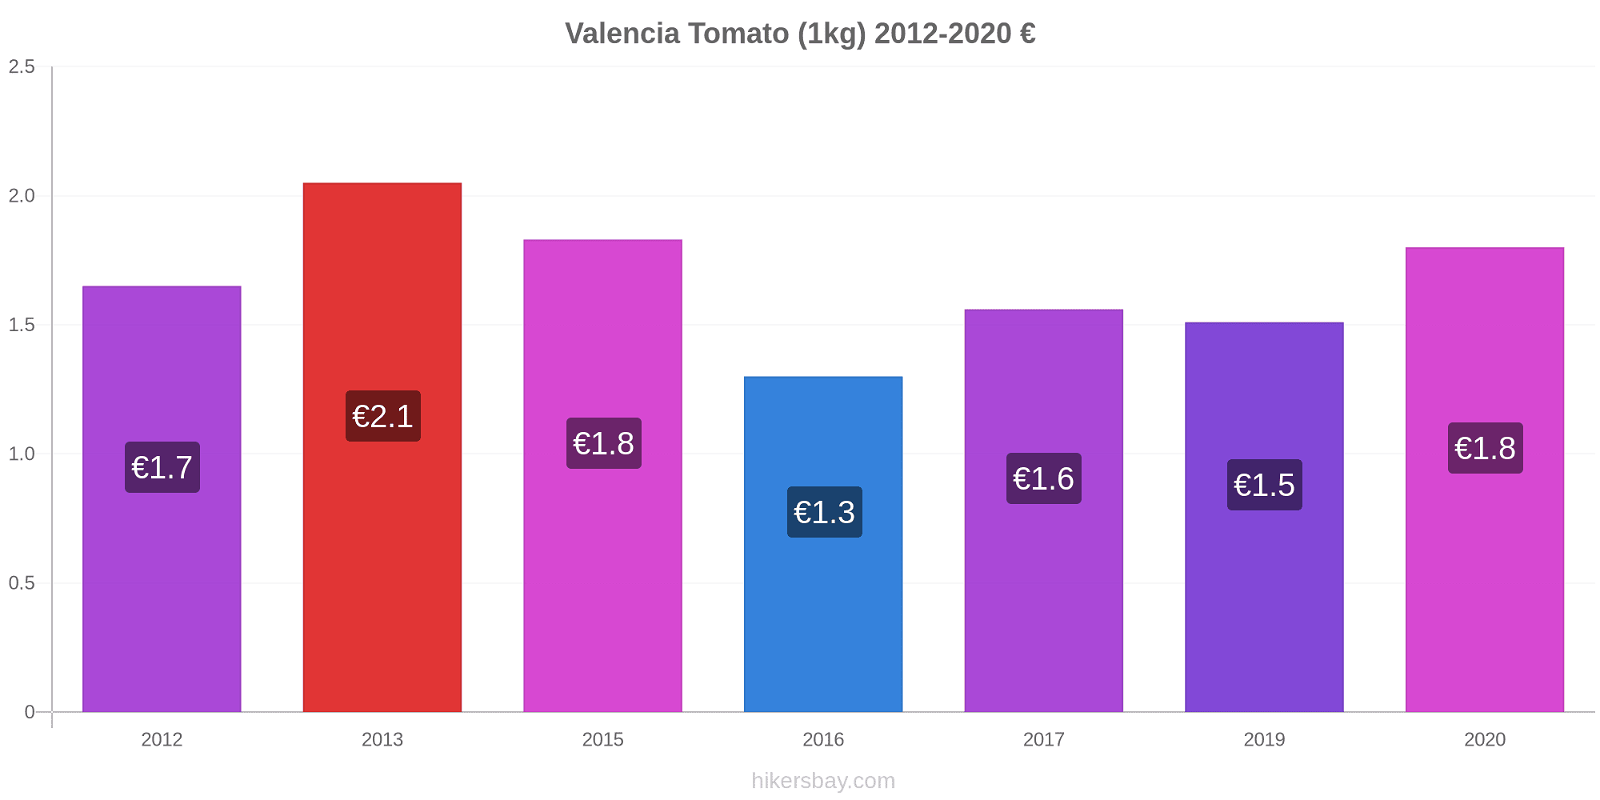 Valencia price changes Tomato (1kg) hikersbay.com